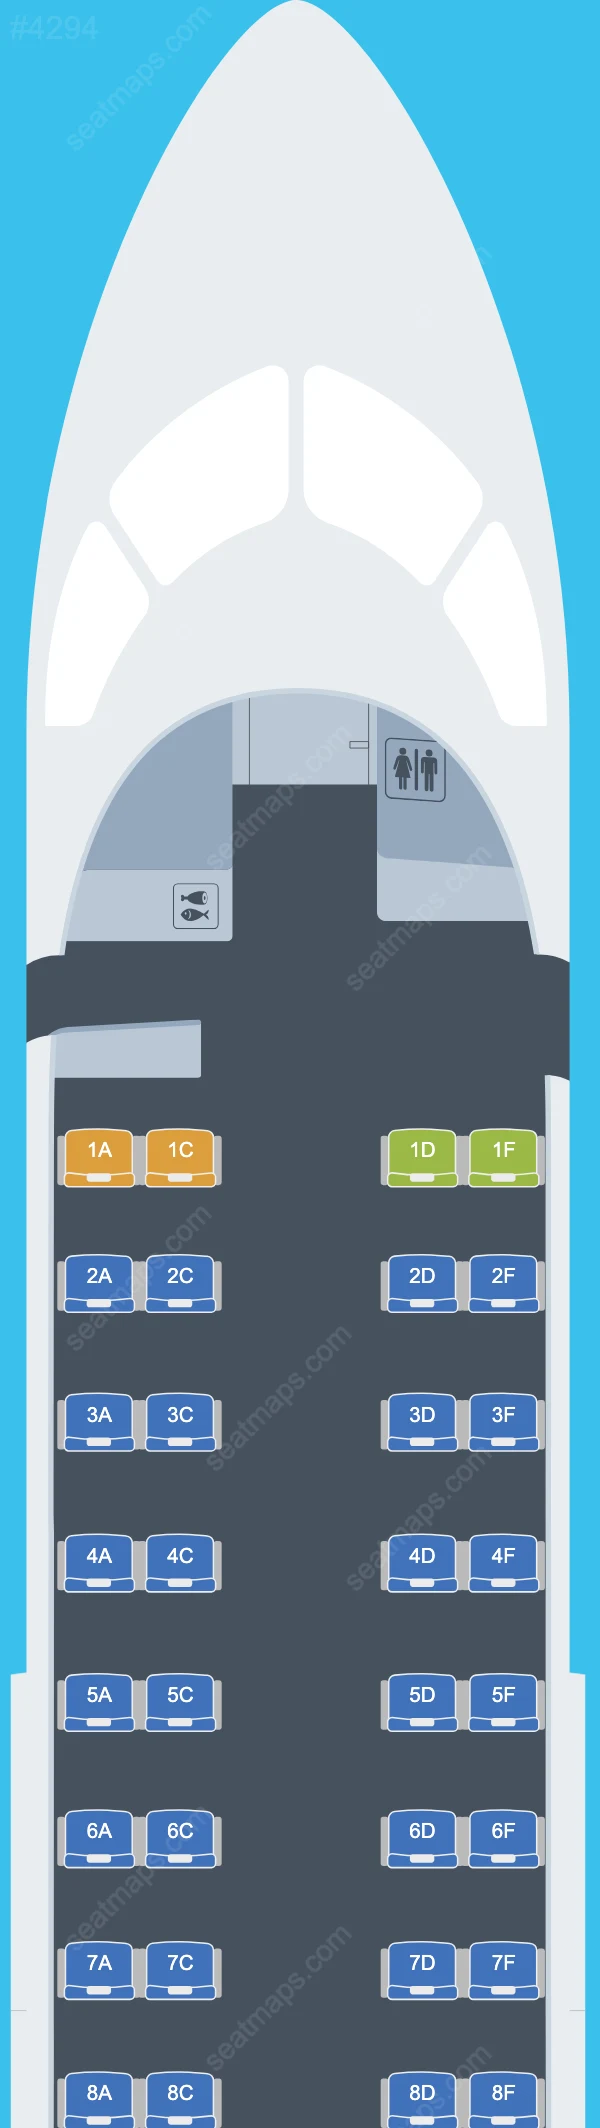 Air Inuit Bombardier Q300 Seat Maps Q300